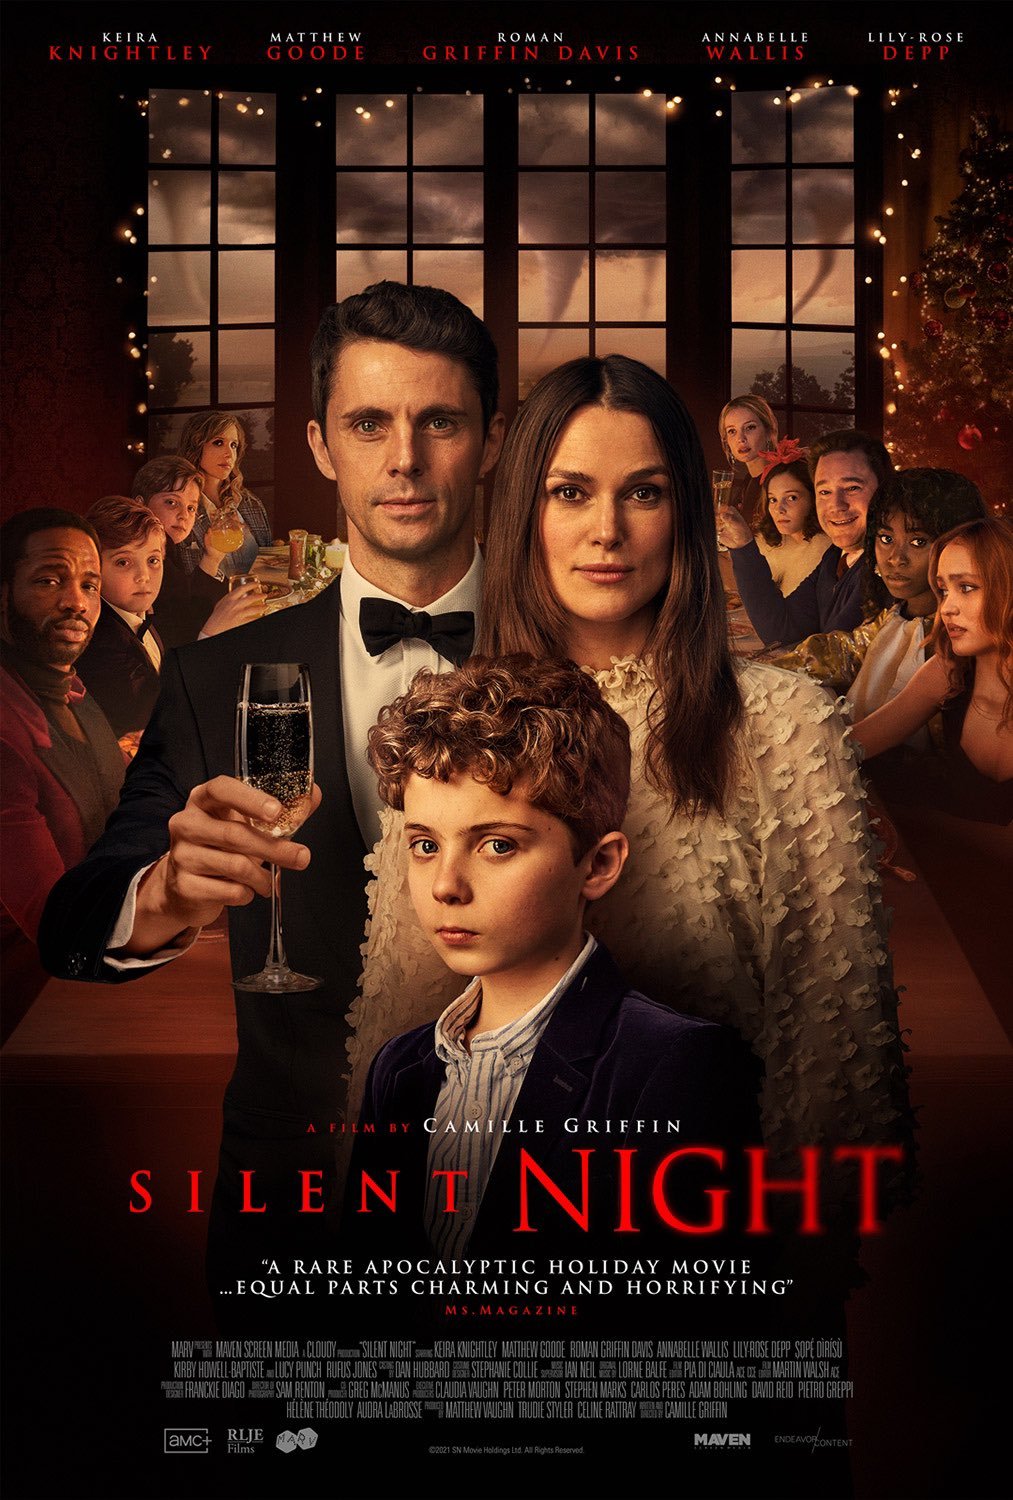 ⬆️ Silent Night official poster! Starring Matthew Goode, Keira Knightley and Roman Griffin-Davis.
In UK cinemas on 3rd December!
📷 via Keira Knightley source Twitter.